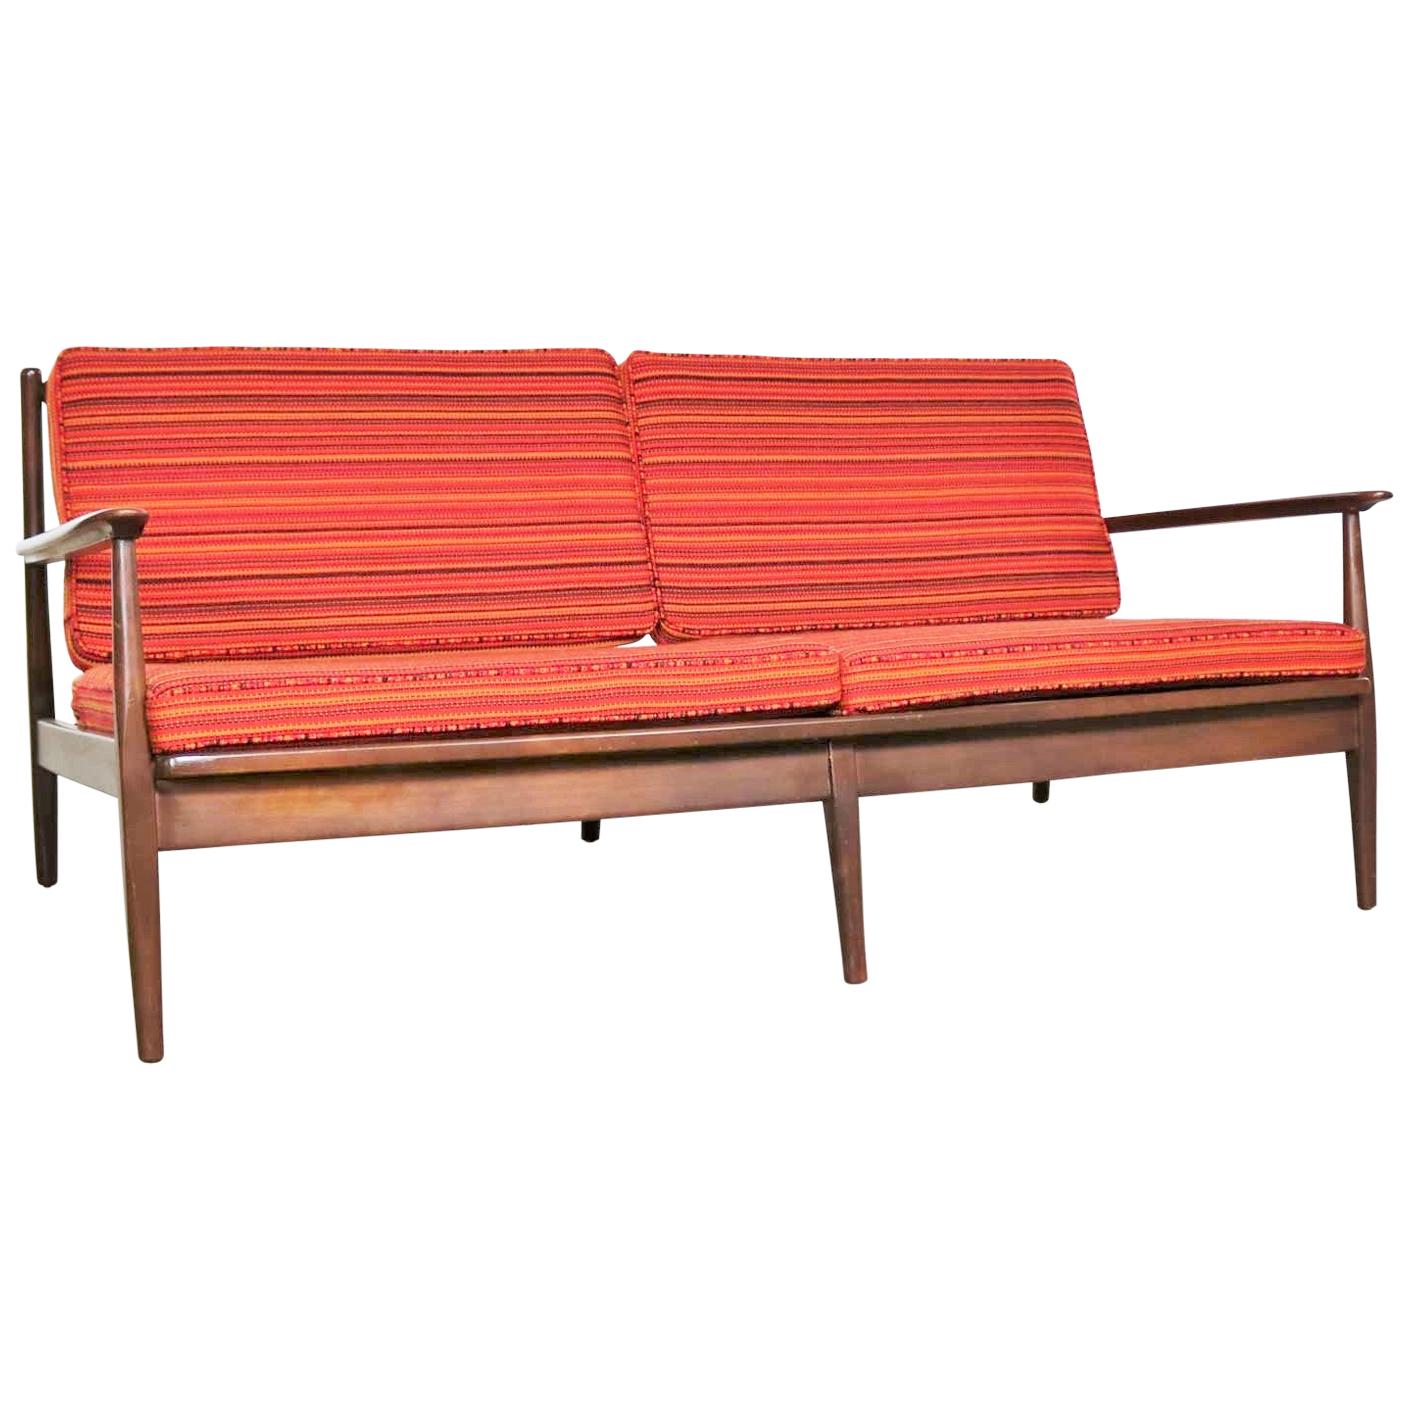 Danish or Scandinavian Modern Loose Cushion Sofa New Red Stripe Upholster